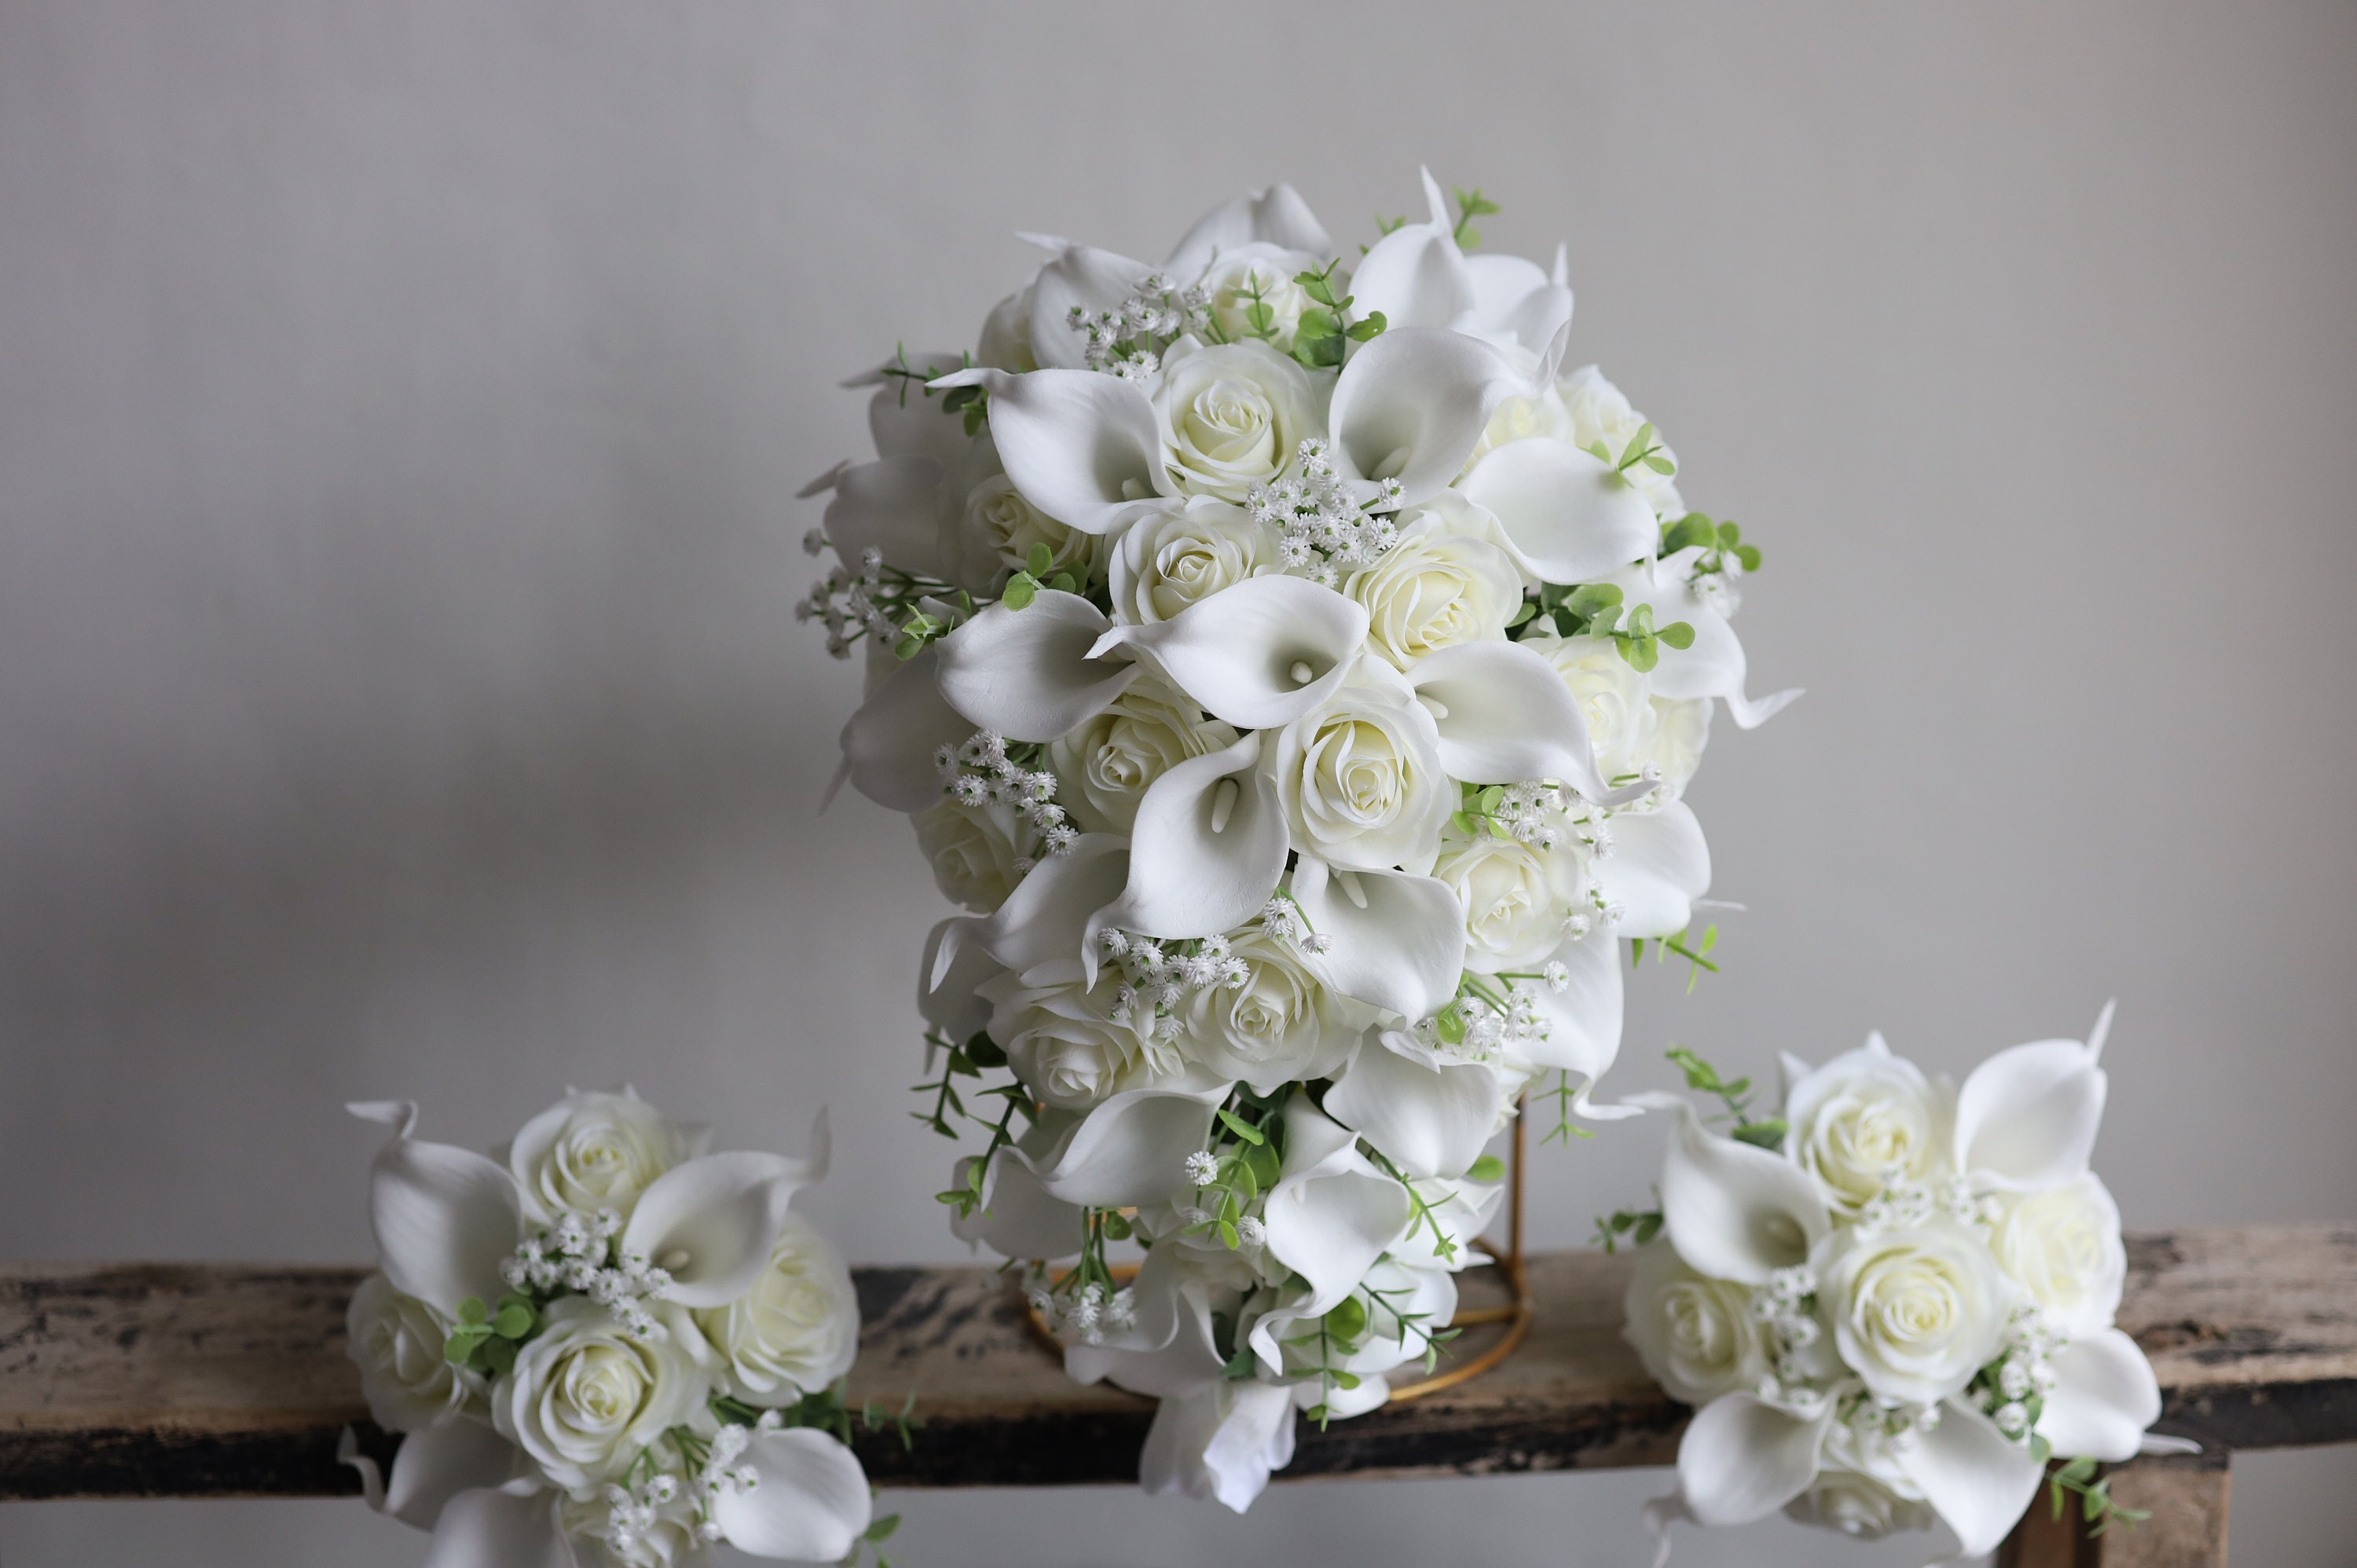 Faux Cream White Roses Wedding Bouquet, White Calla Lilies, Baby's